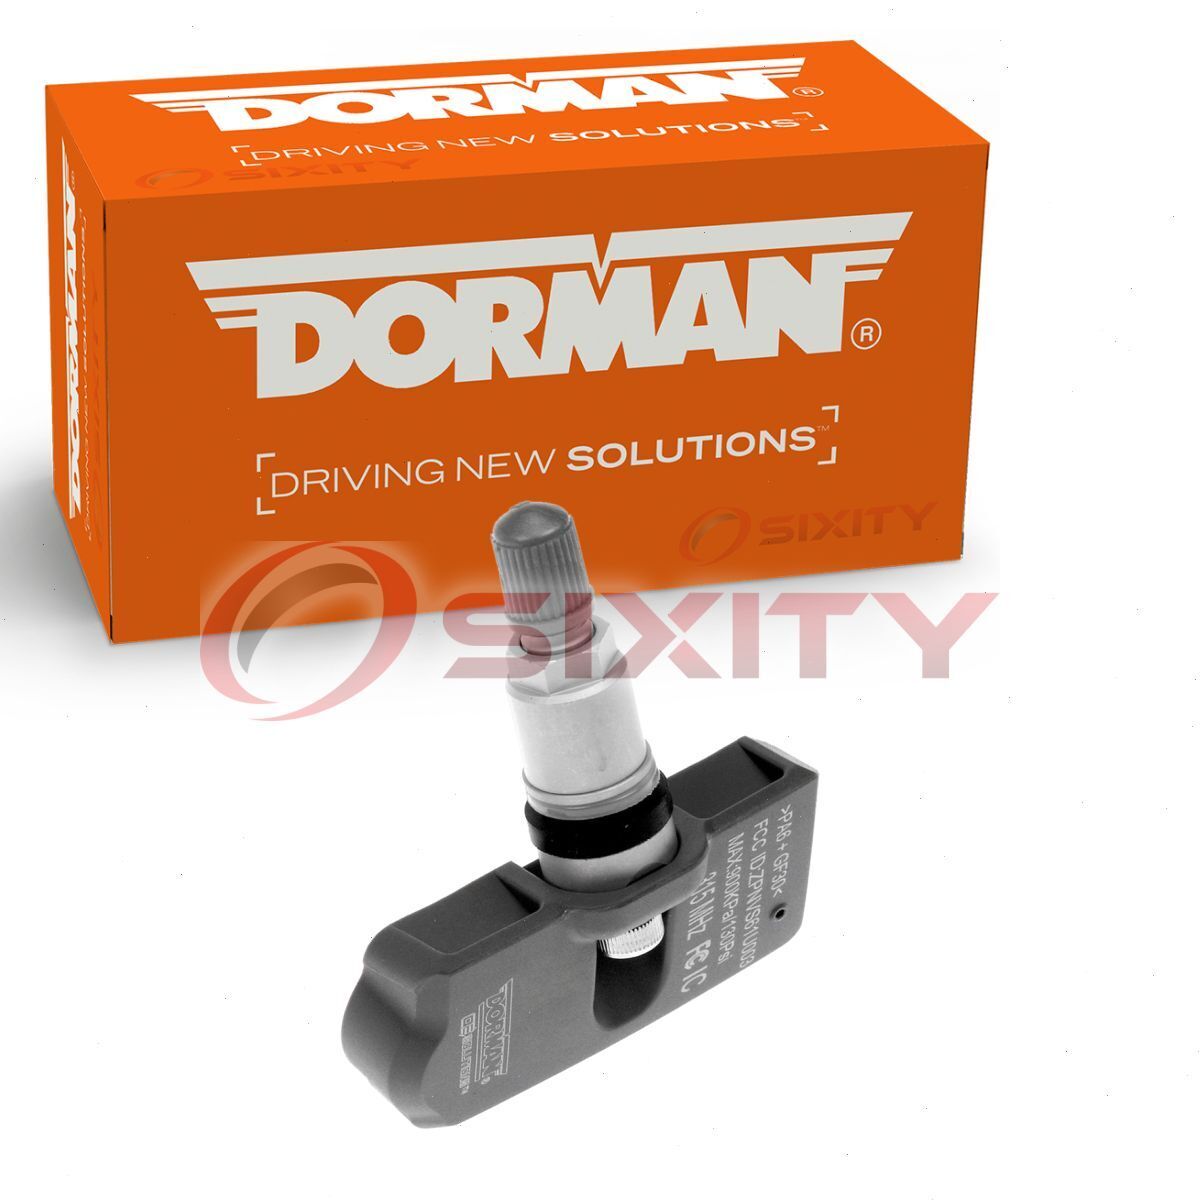 Dorman TPMS Programmable Sensor for 2000 BMW 323Ci Tire Pressure Monitoring hw